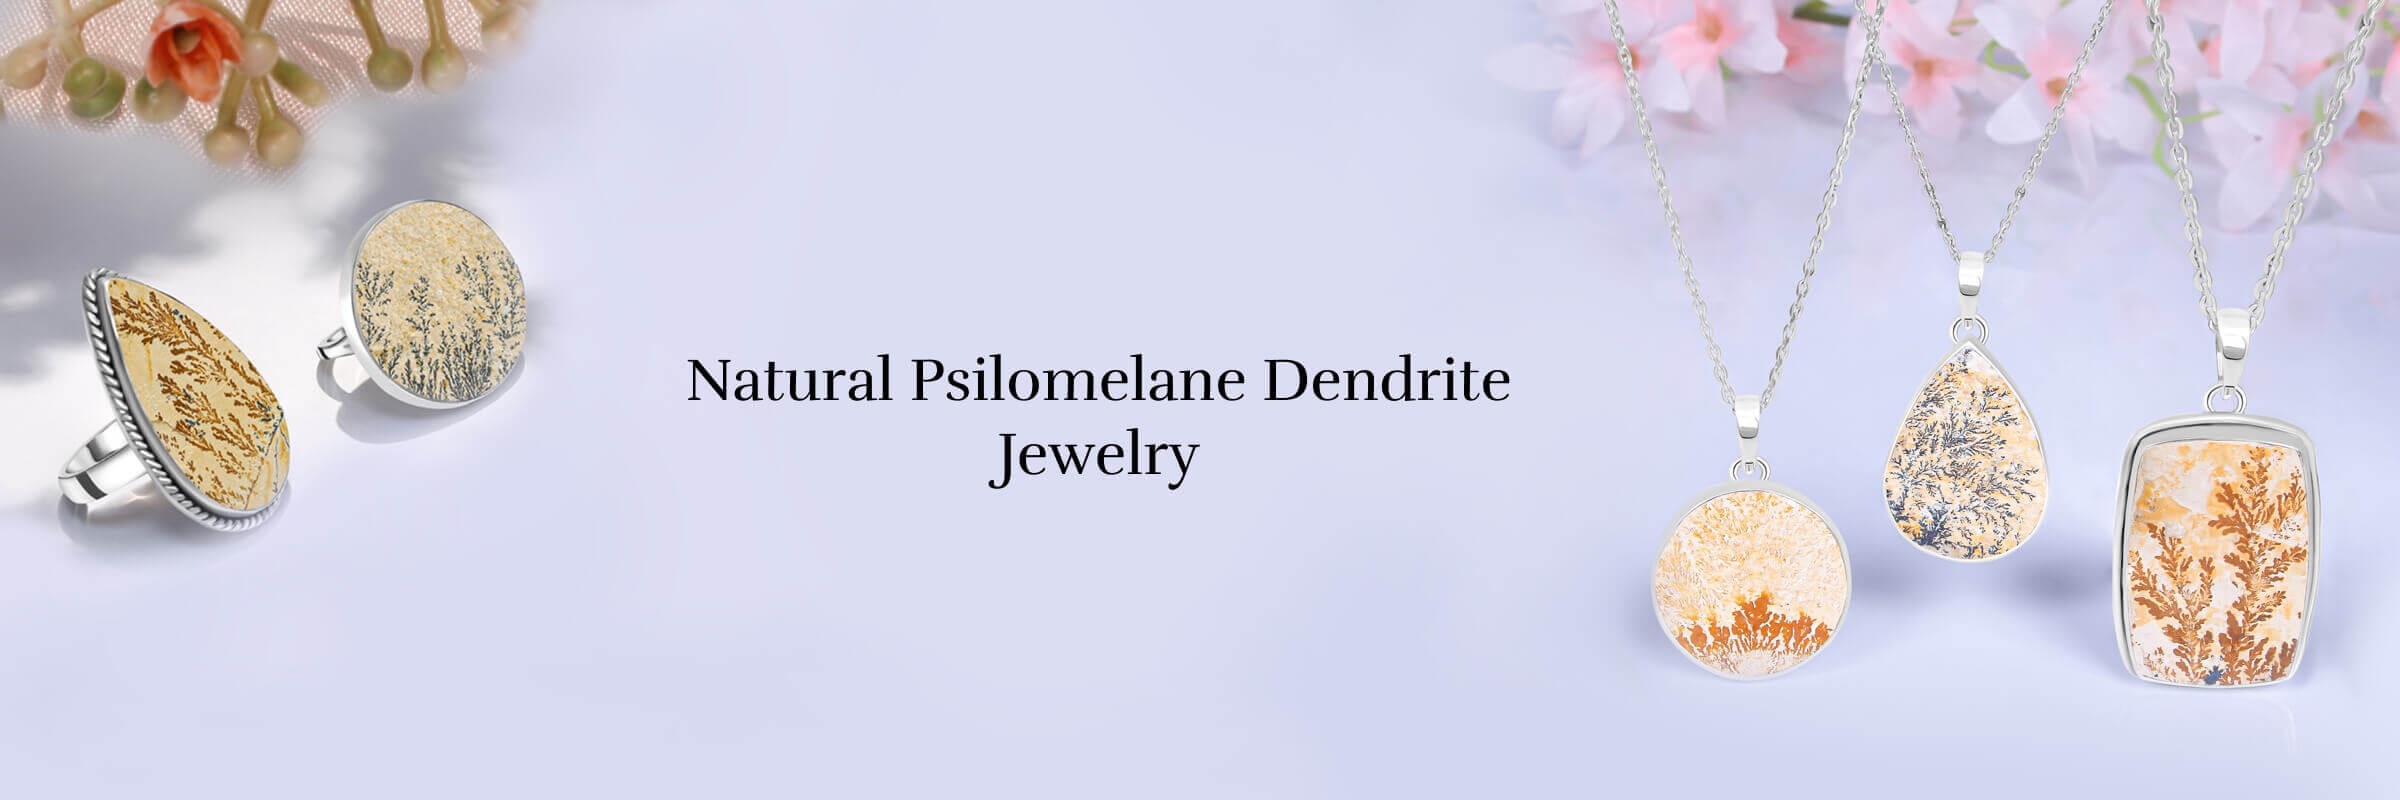 Psilomelane Dendrite Jewelry